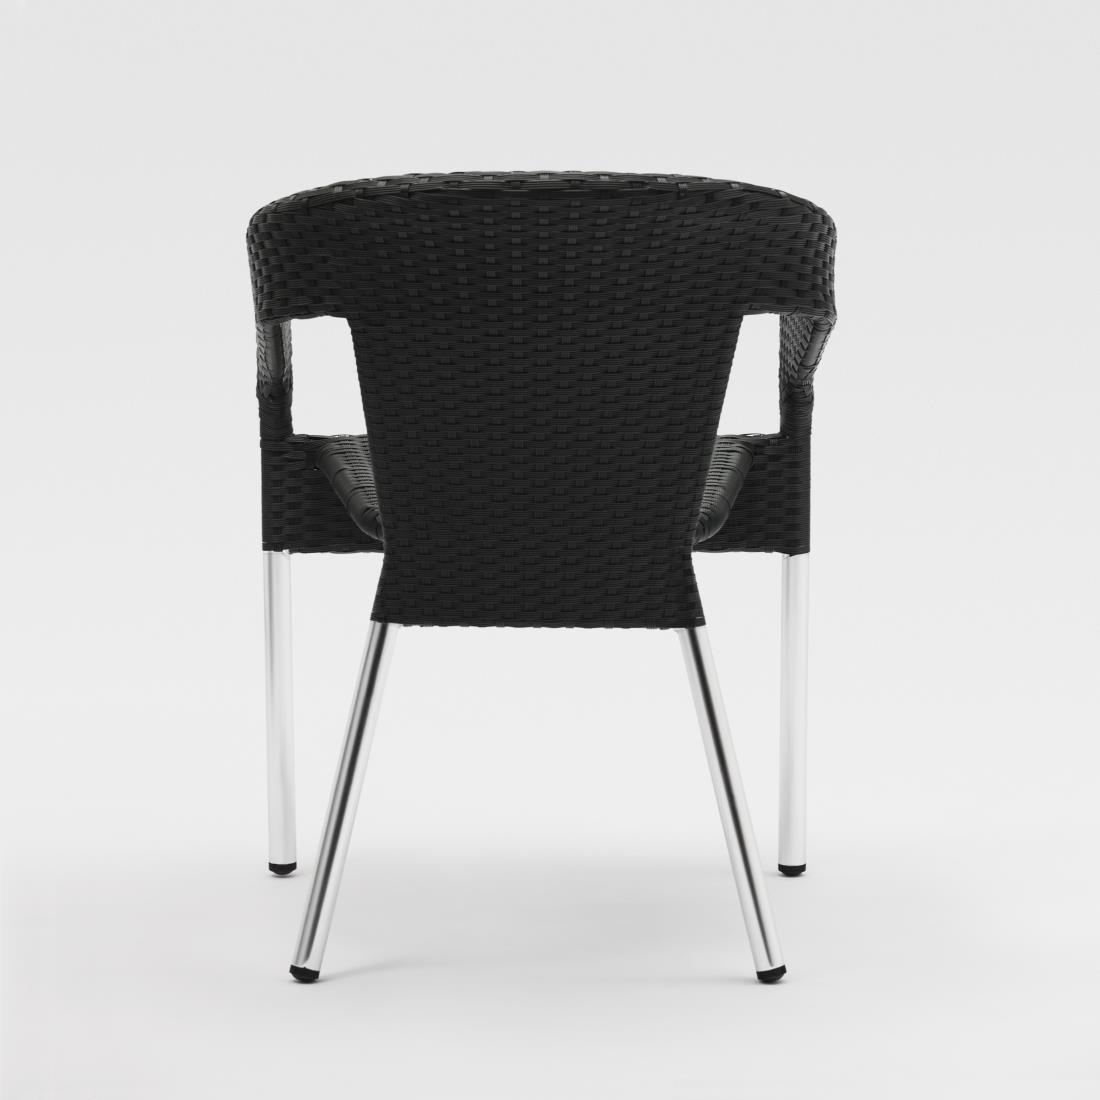 Bolero Wicker Wraparound Bistro Chairs Charcoal (Pack of 4) - CG223  - 6